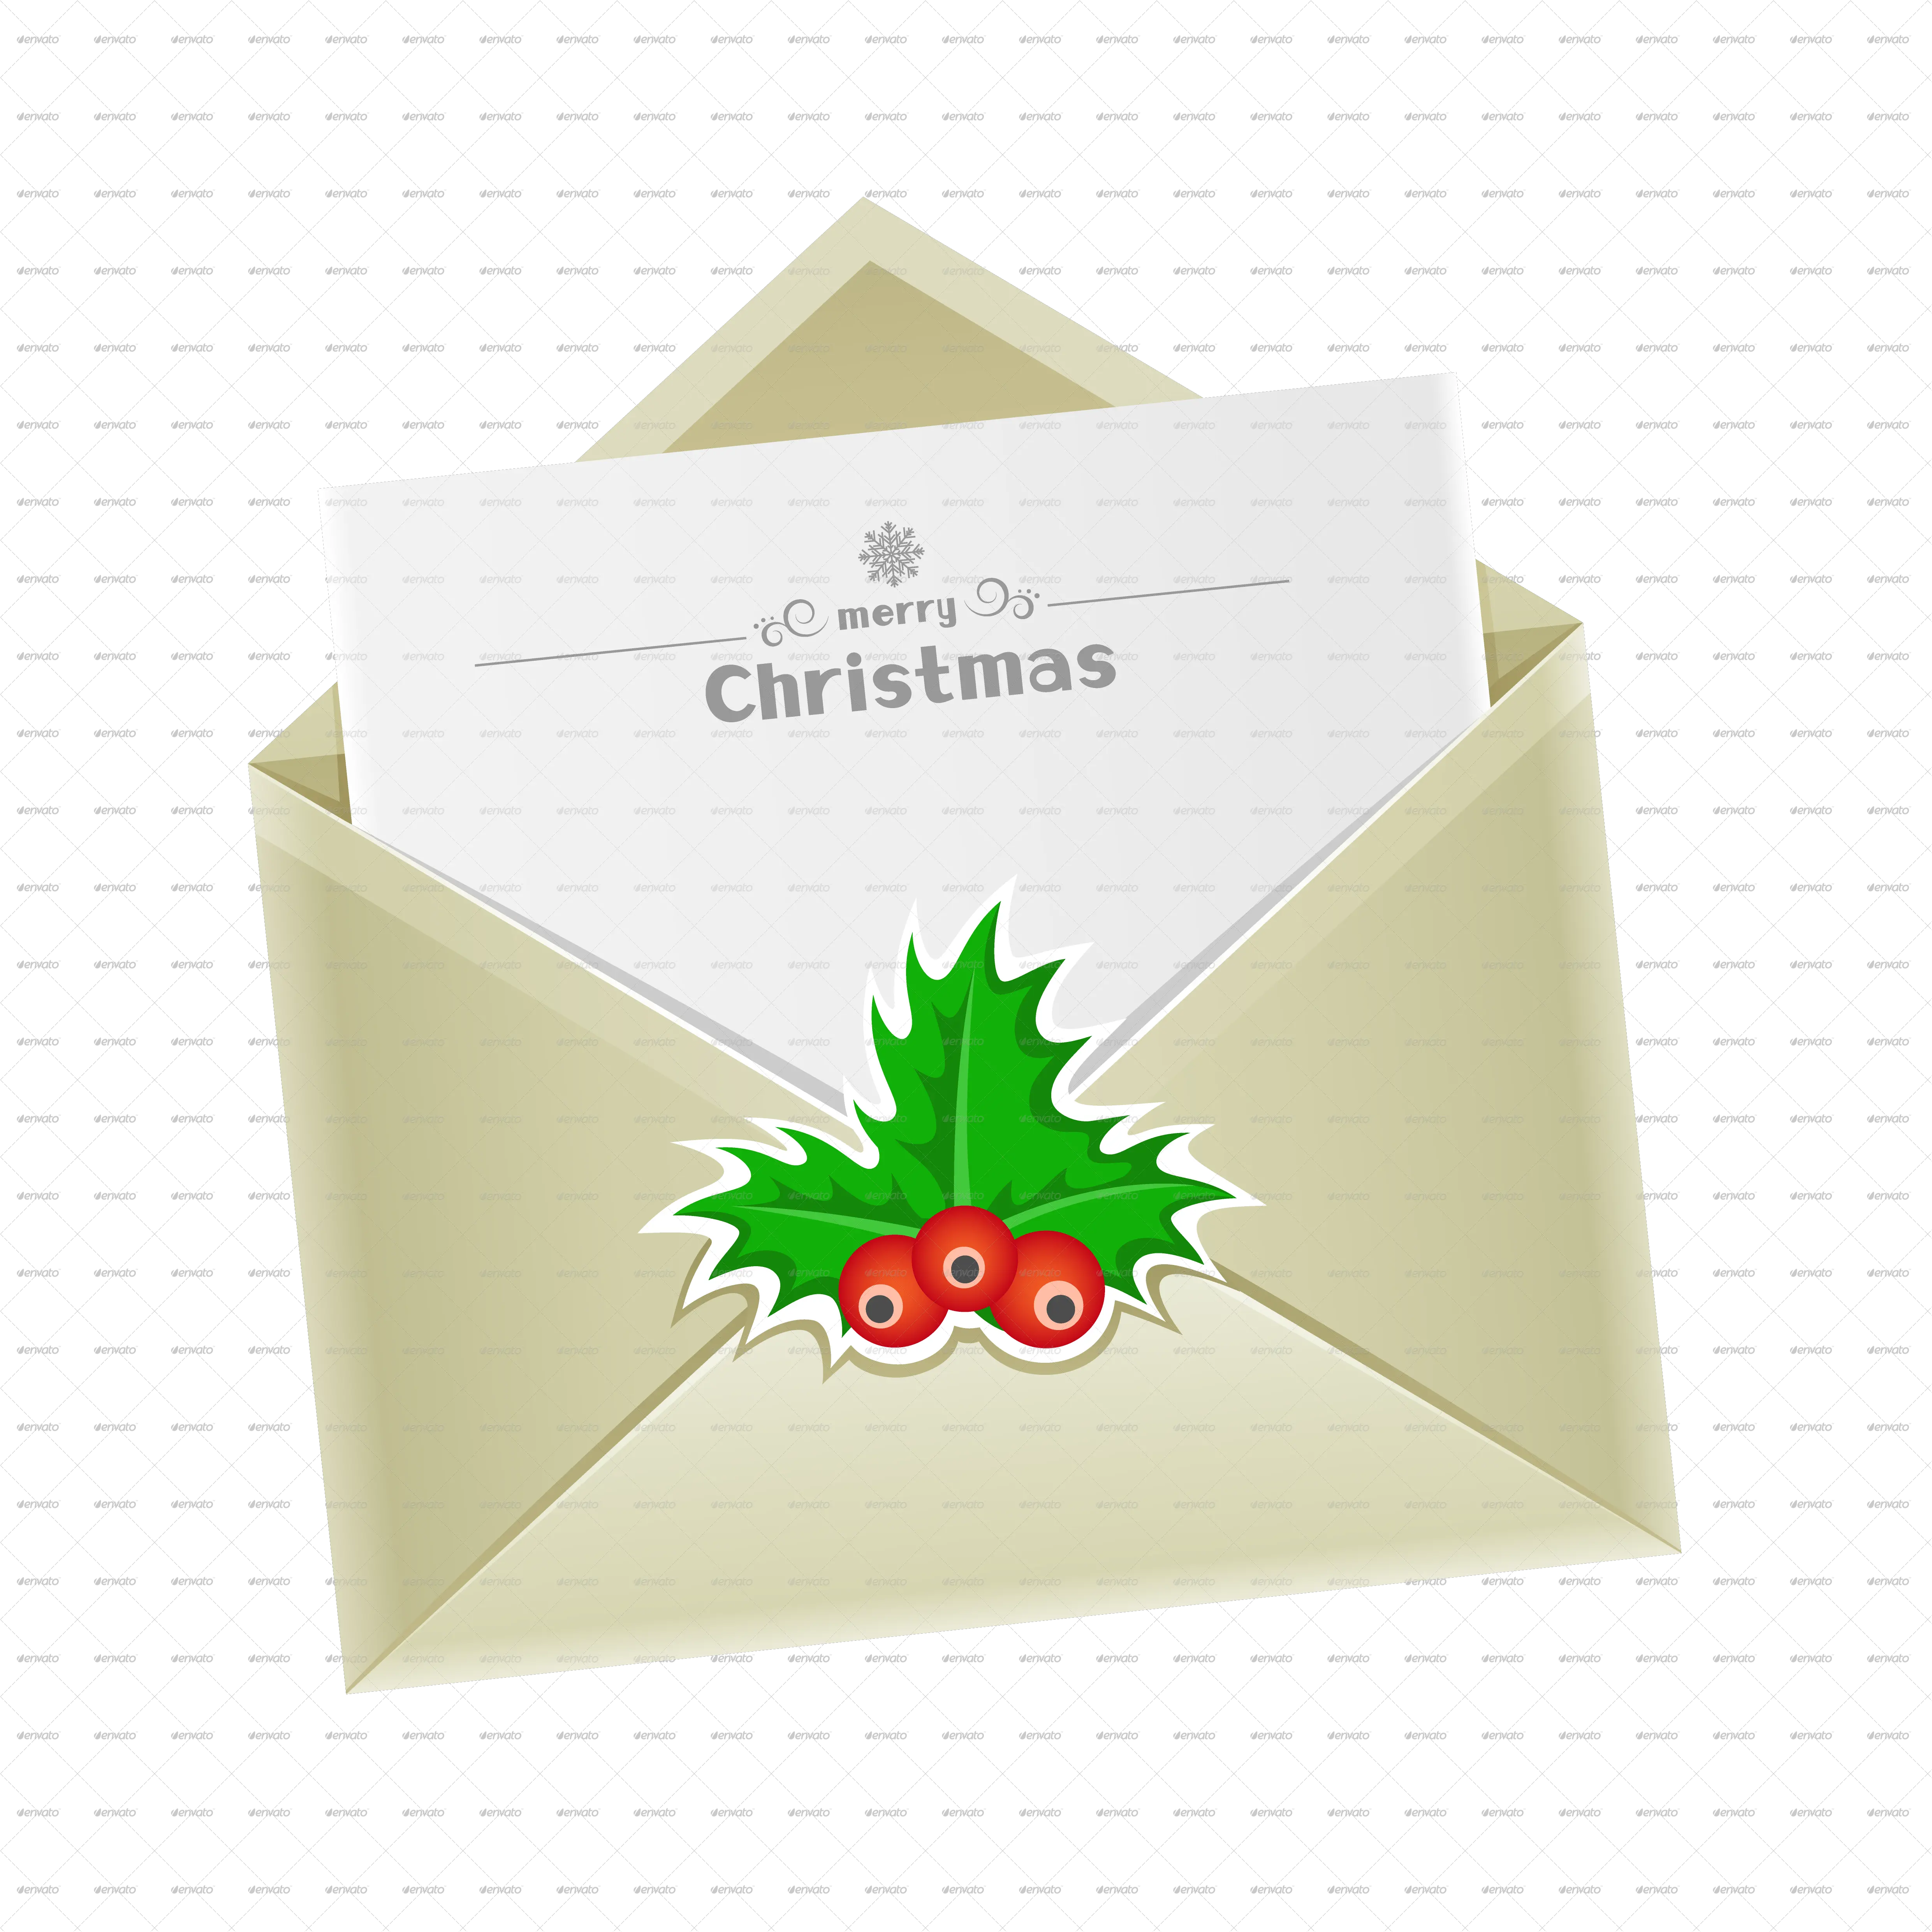 Email Envelope Png